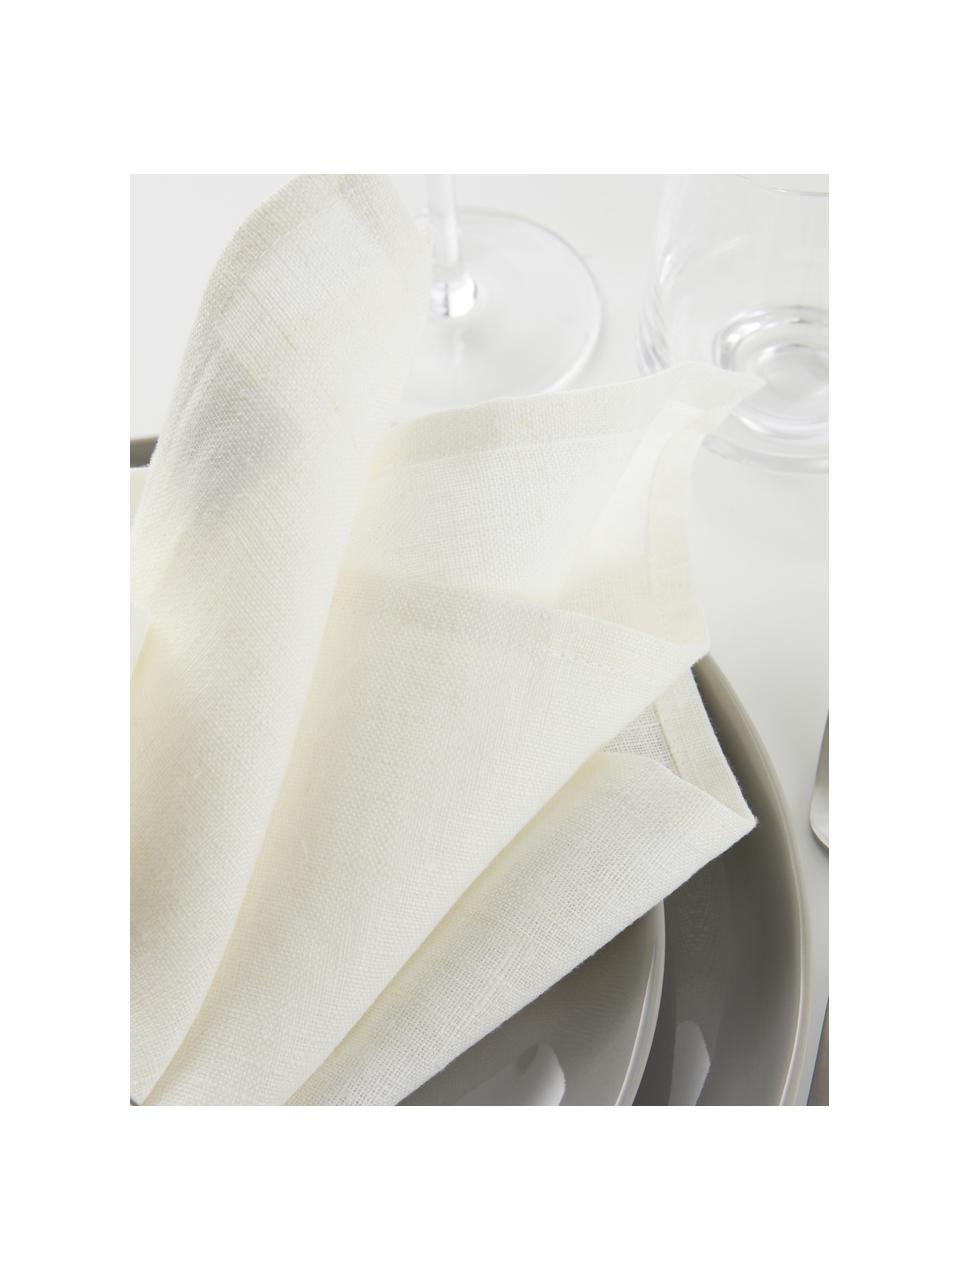 Linnen servetten Heddie in wit, 2 stuks, 100% linnen, Wit, 45 x 45 cm